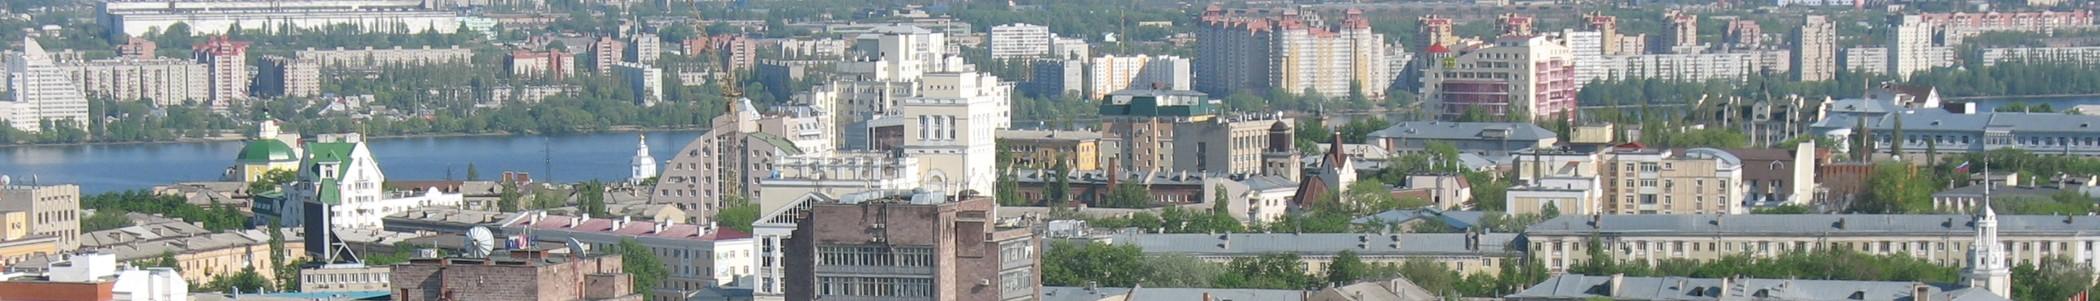 Banner image for Voronezh on GigsGuide